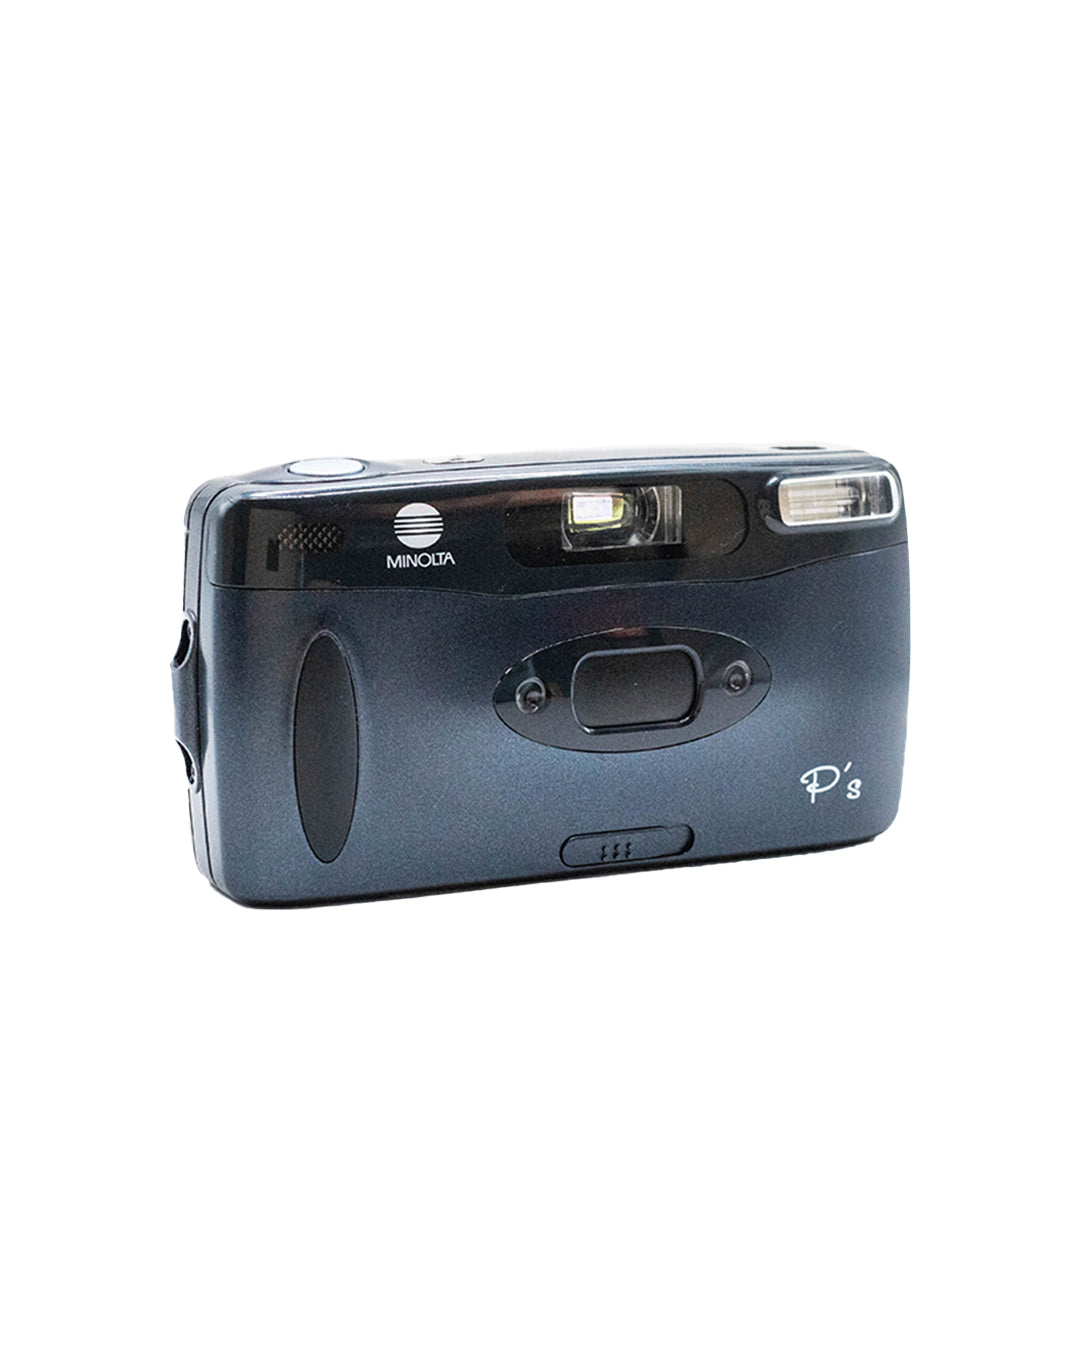 Minolta P's 35mm Panoramic Point & Shoot Film Camera with 24mm